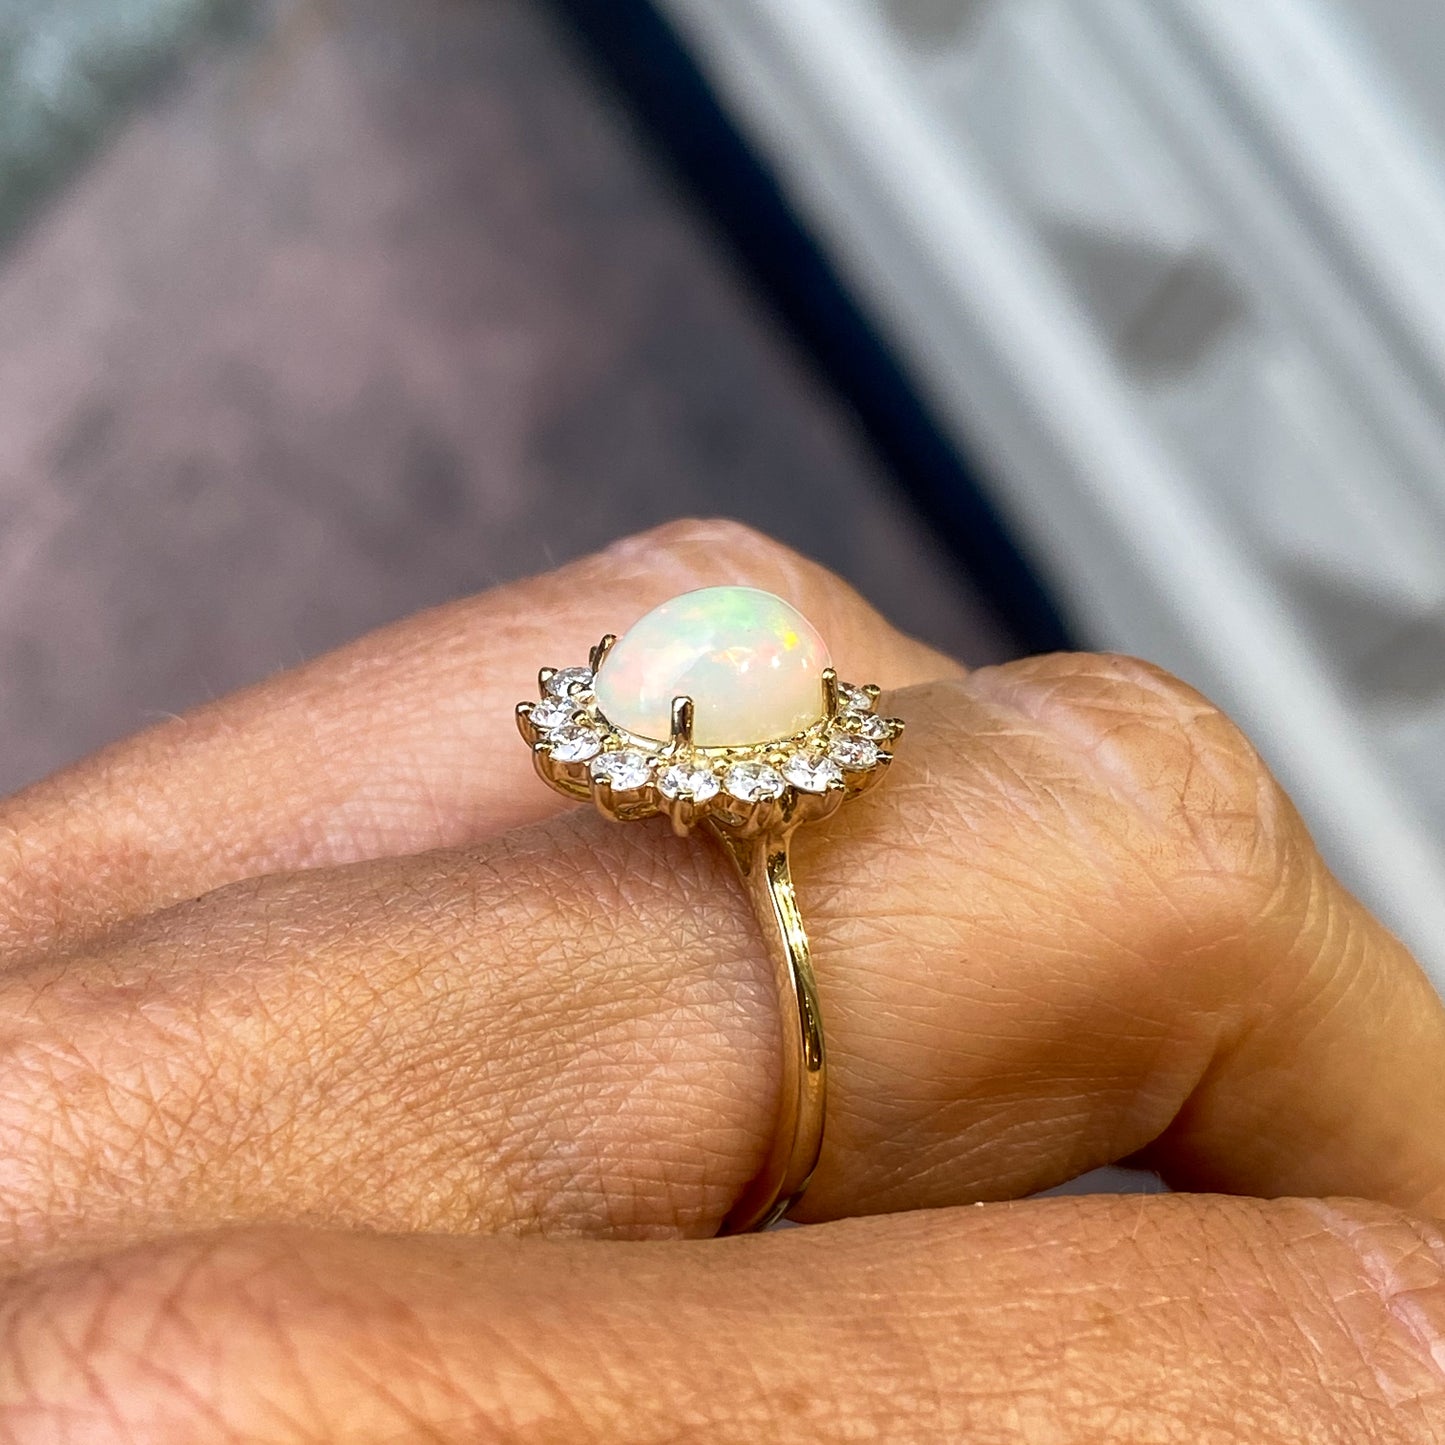 9ct Gold Gem Opal & Diamond Ring - John Ross Jewellers